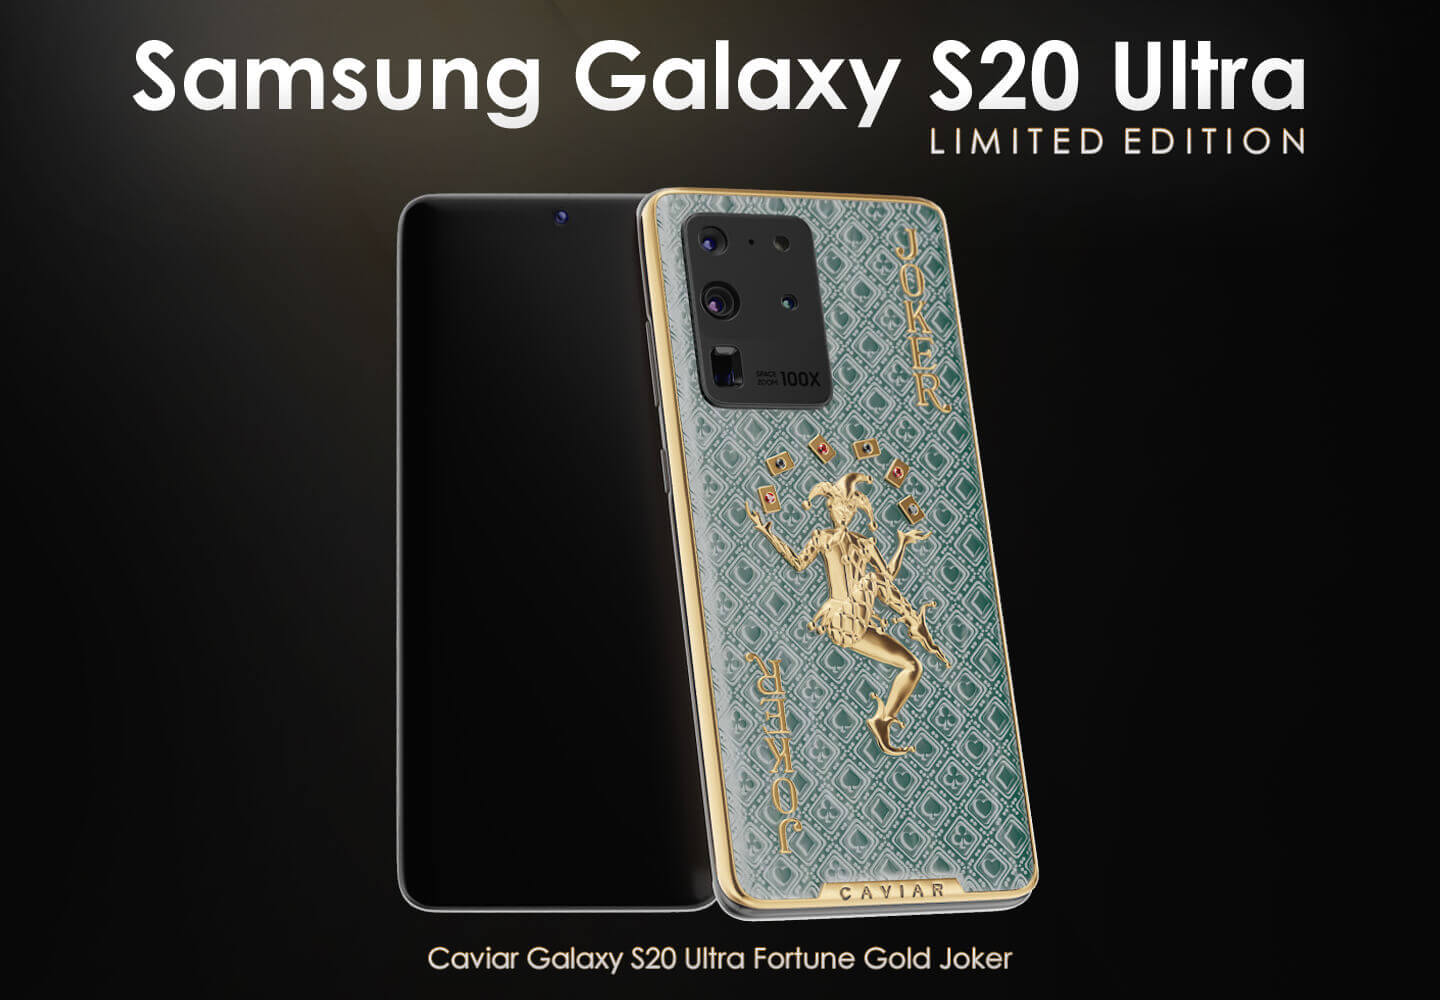 Samsung Galaxy S20 Ultra Limited Edition phones from Caviar LetsGoDigital